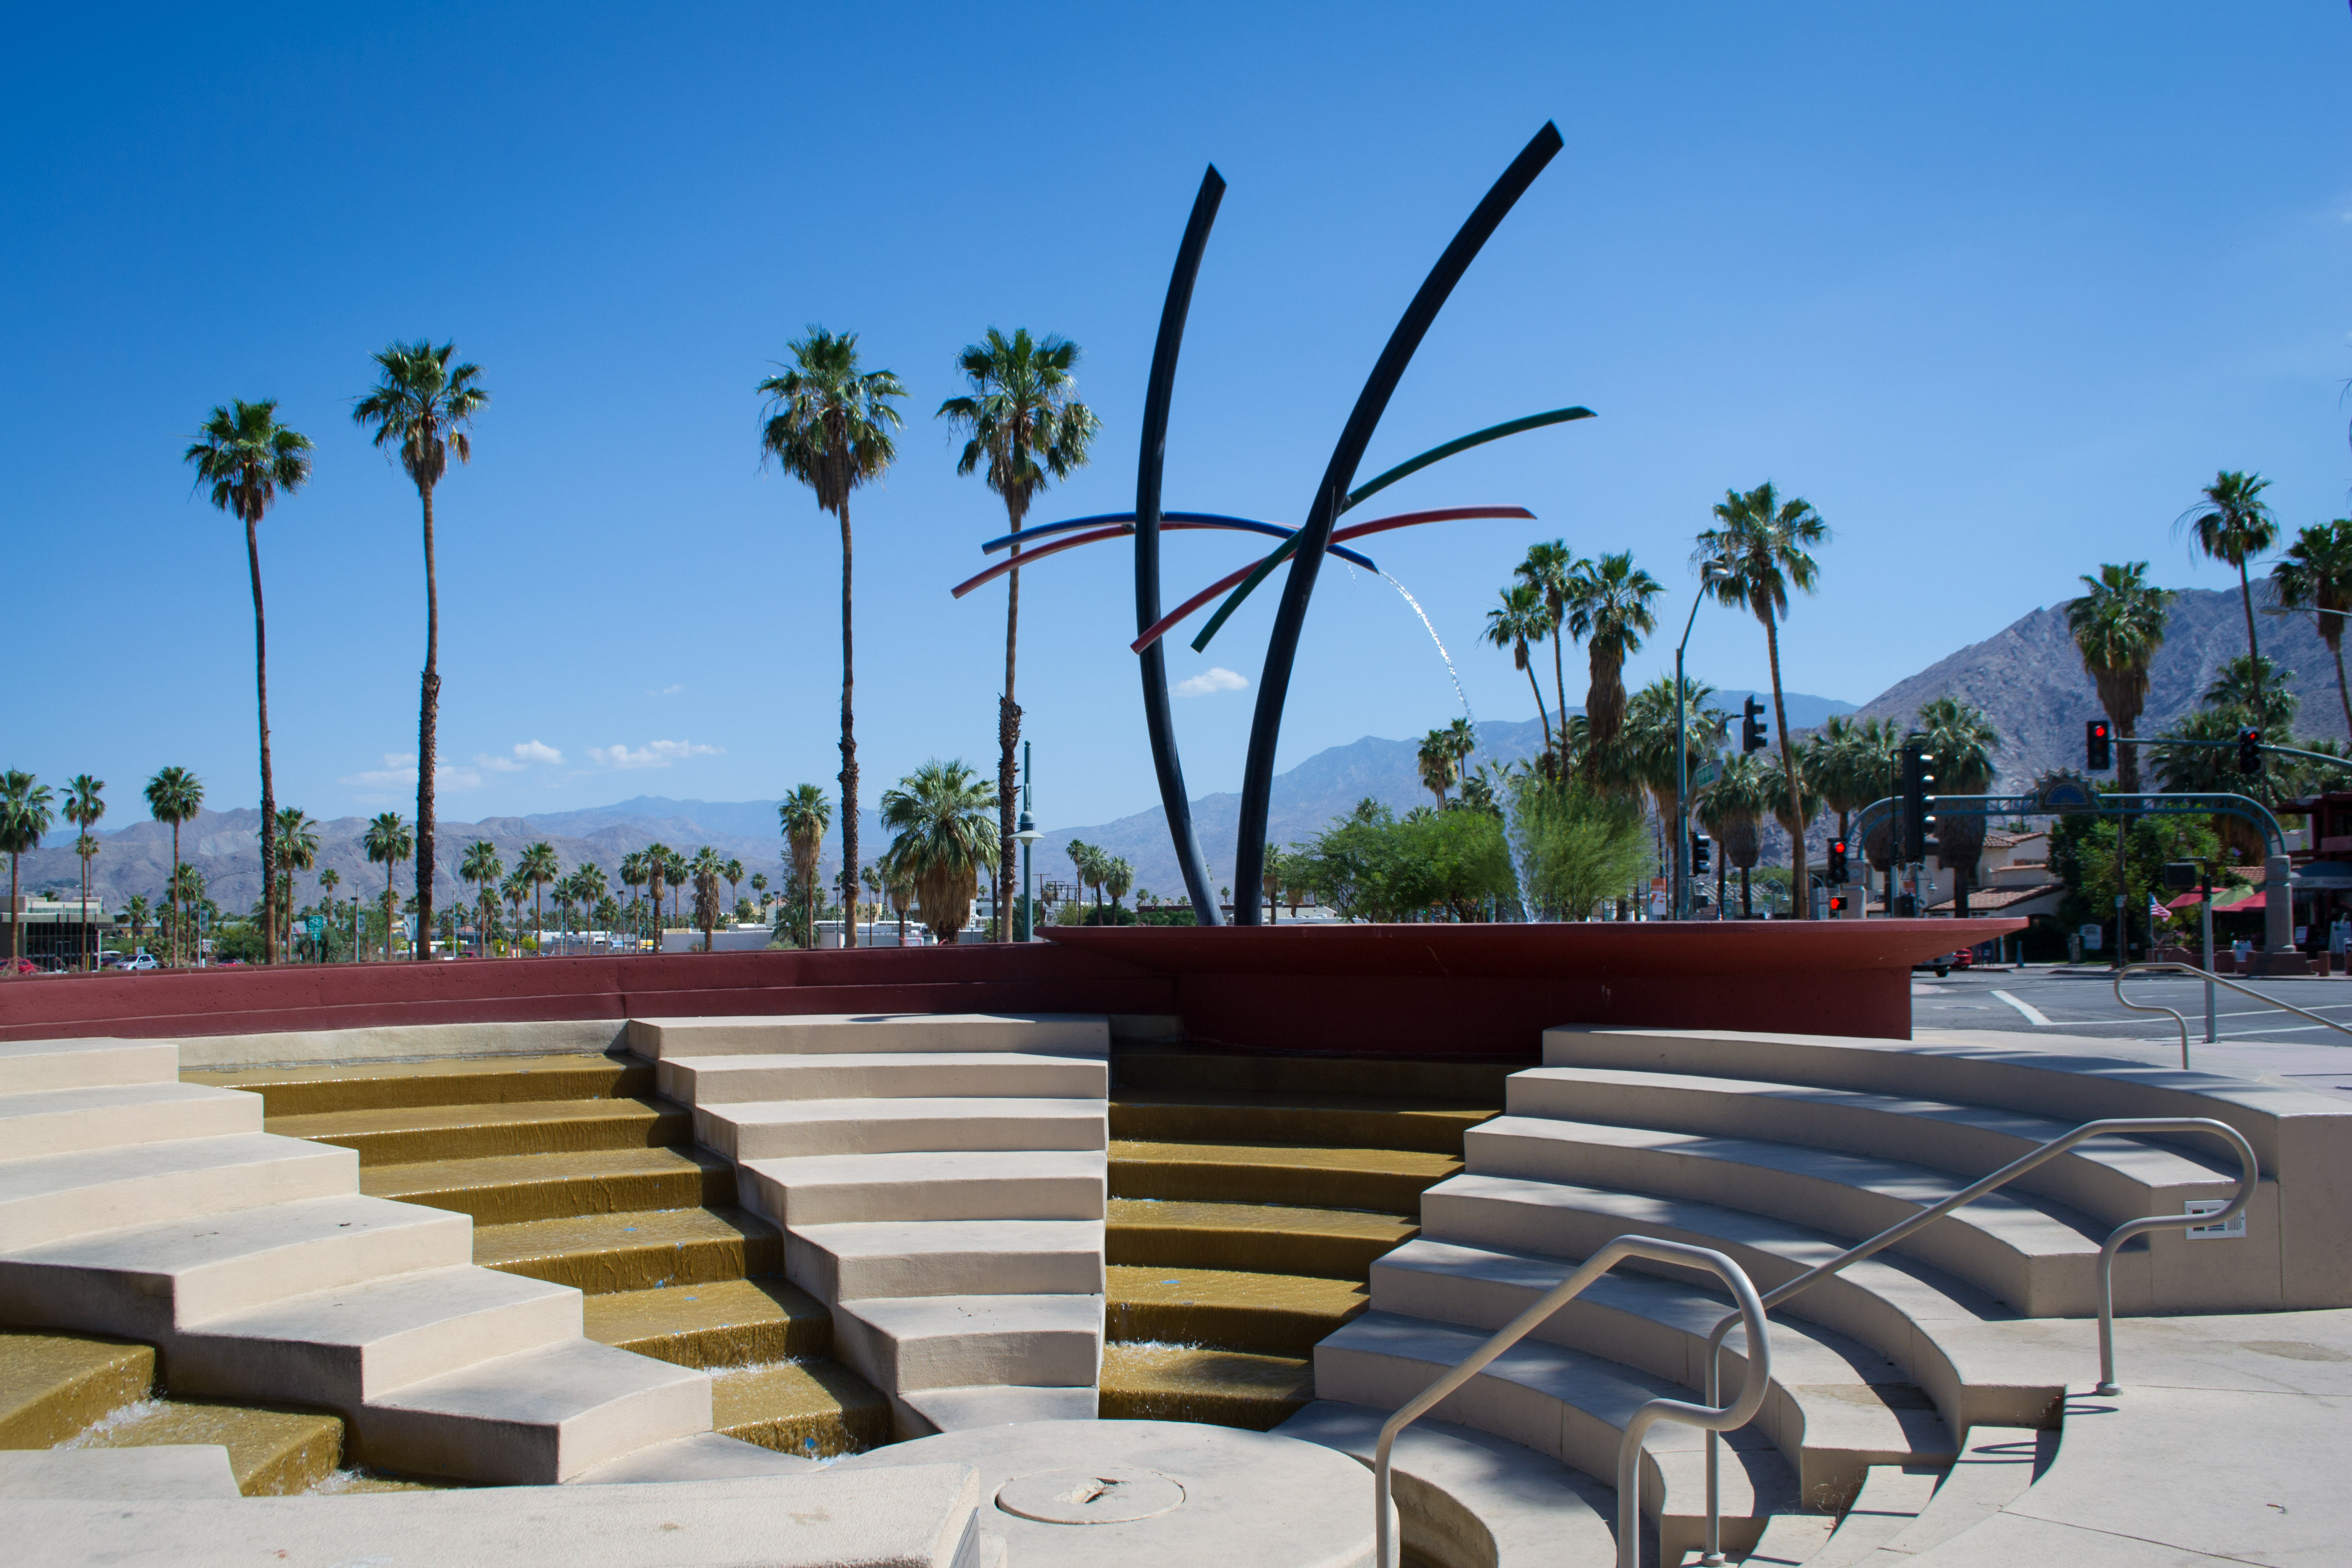 The Rainmaker Fountain in Palm Springs, California